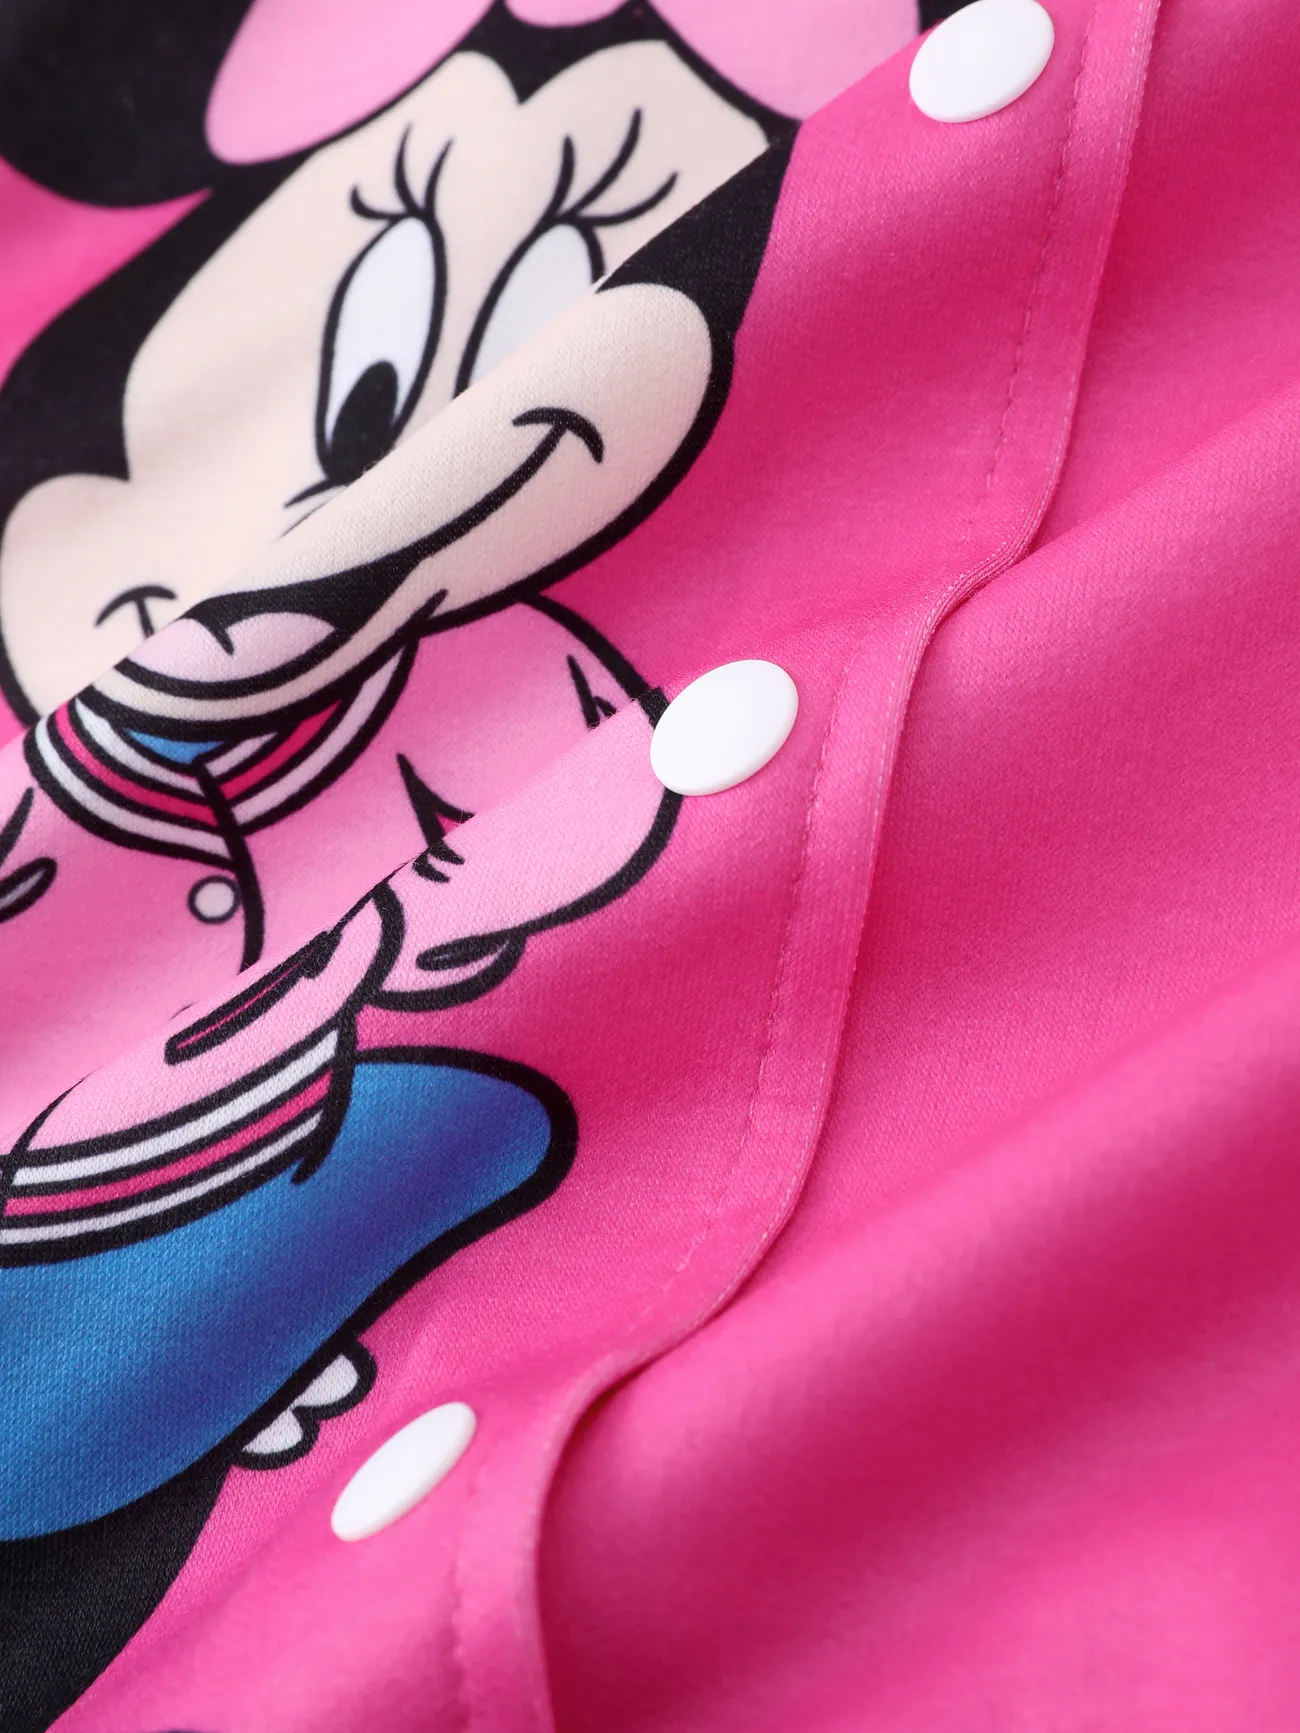 Disney Mickey and Friends Toddler/Kids Girl Letter Print Colorblock Lightweight Bomber Jacket Hot Pink big image 1